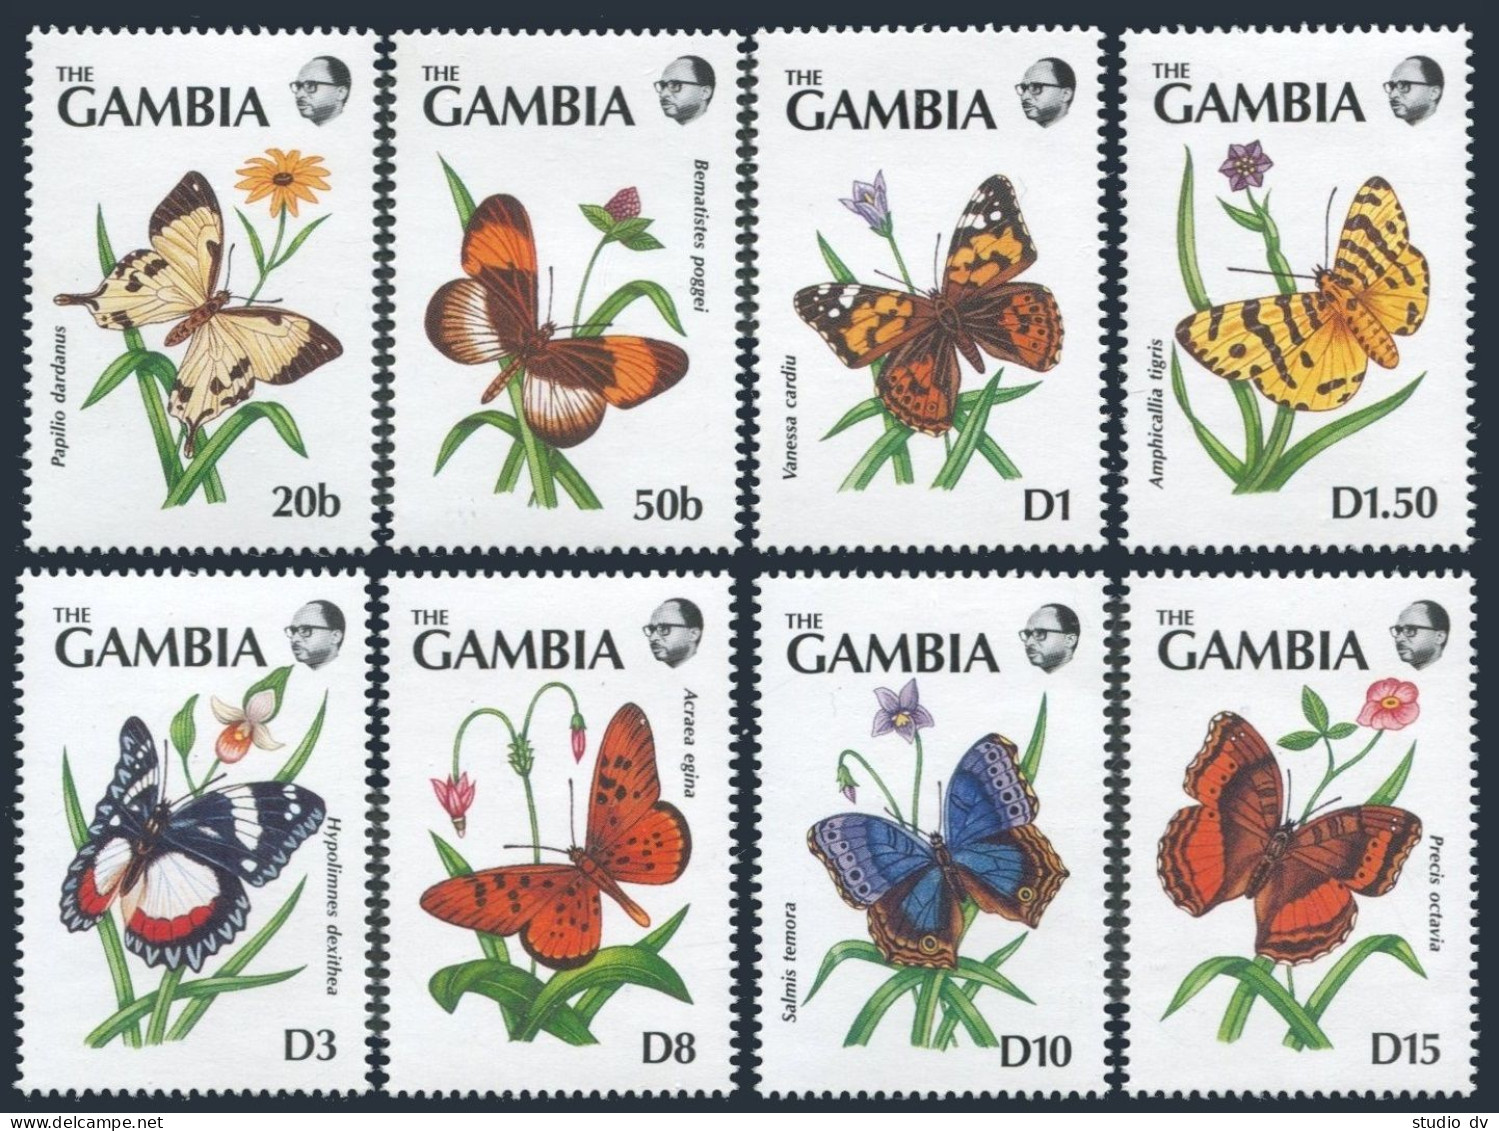 Gambia 1068-1075,1076-1079,MNH.Michel 1164-1171,Bl.112-115. Butterflies 1991. - Gambie (1965-...)